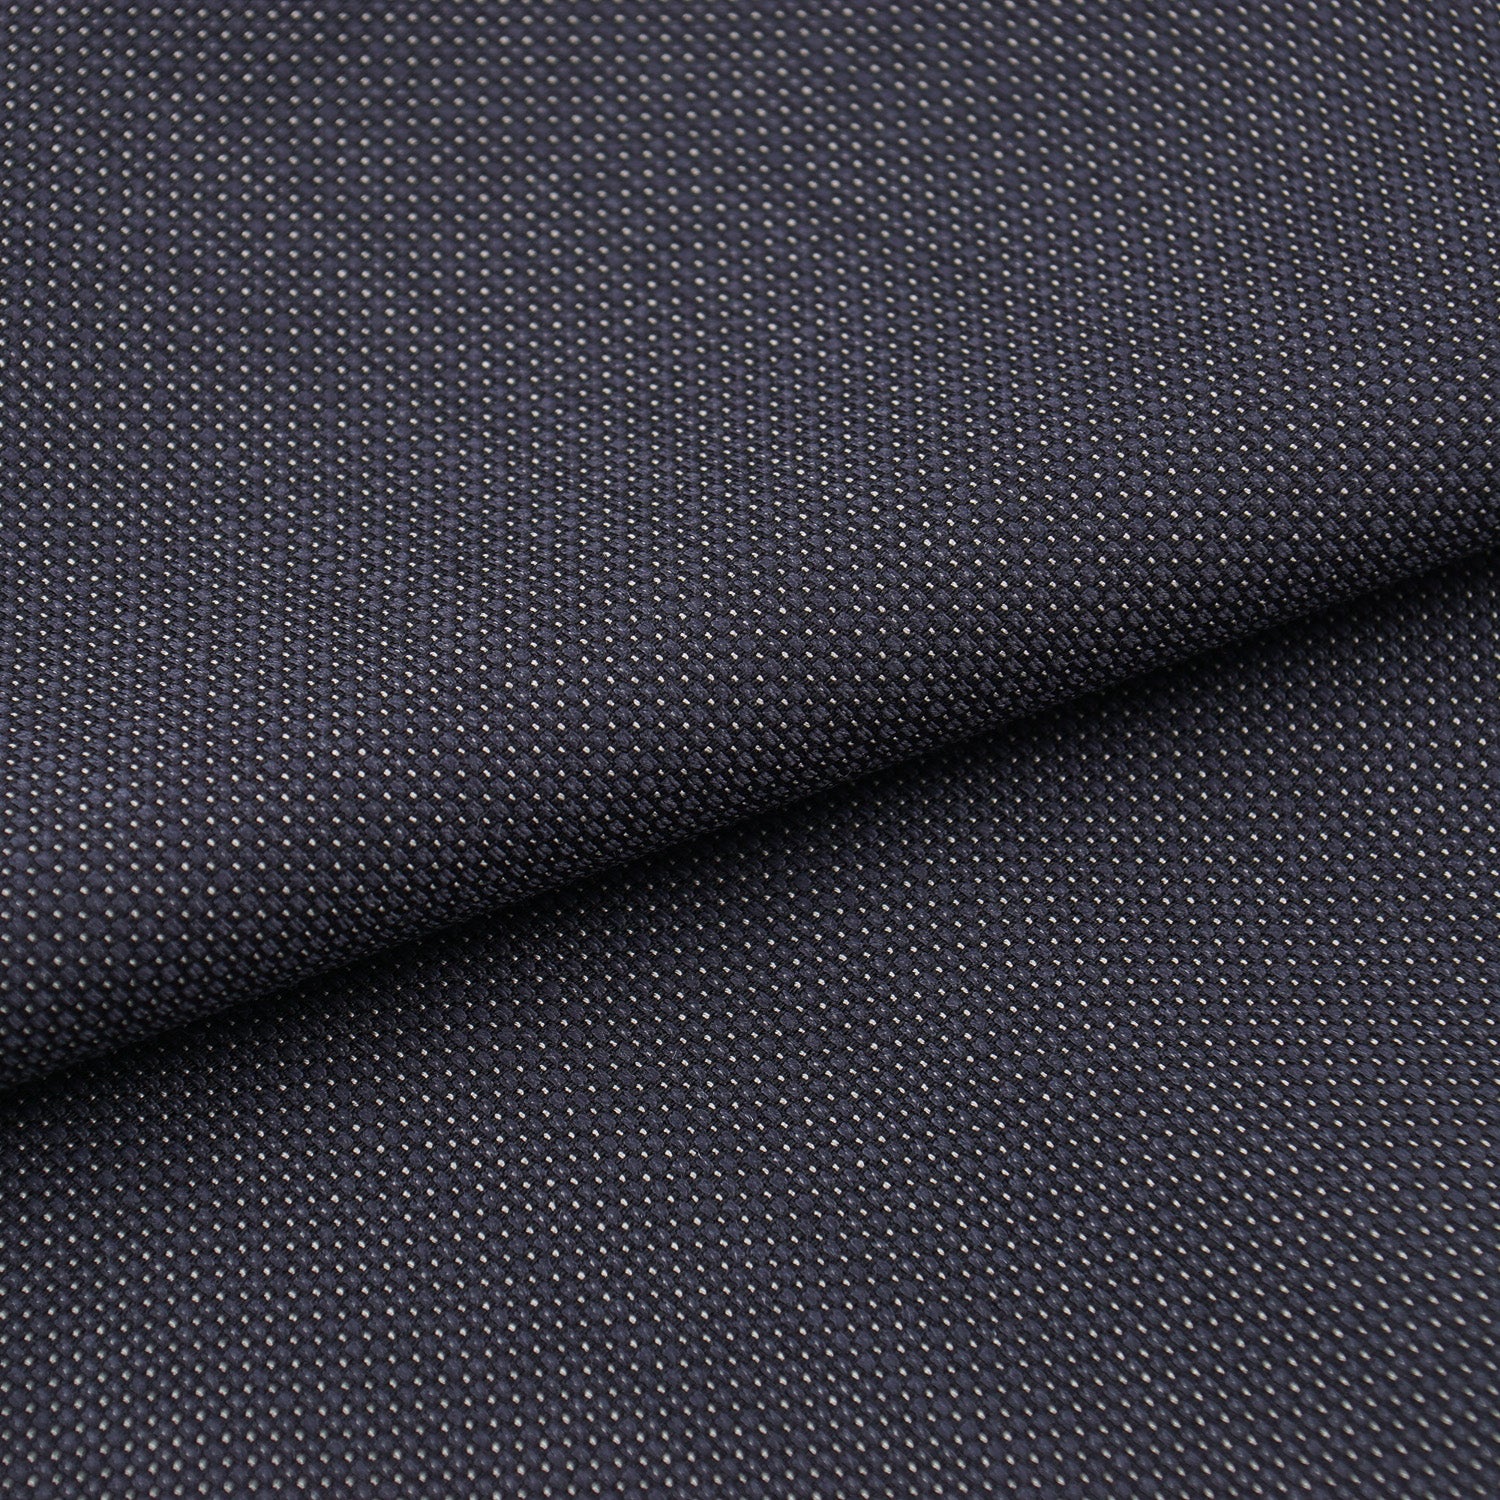 PT01 Slim-Fit Patterned Wool Pants - Top Shelf Apparel